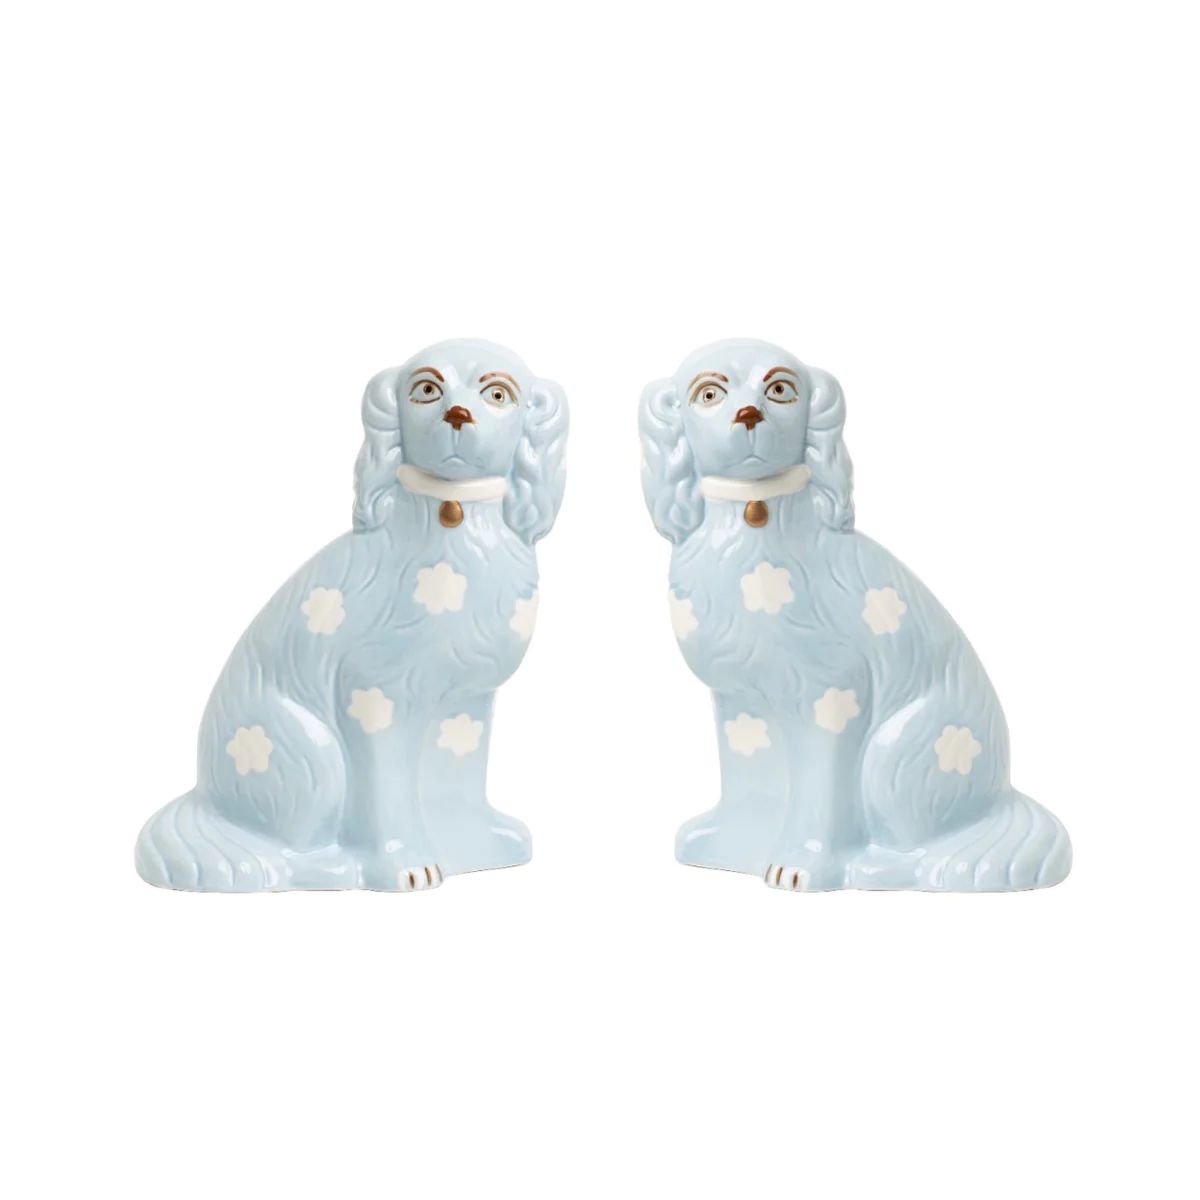 Pale Blue Porcelain Staffordshire Dogs | Sea Marie Designs